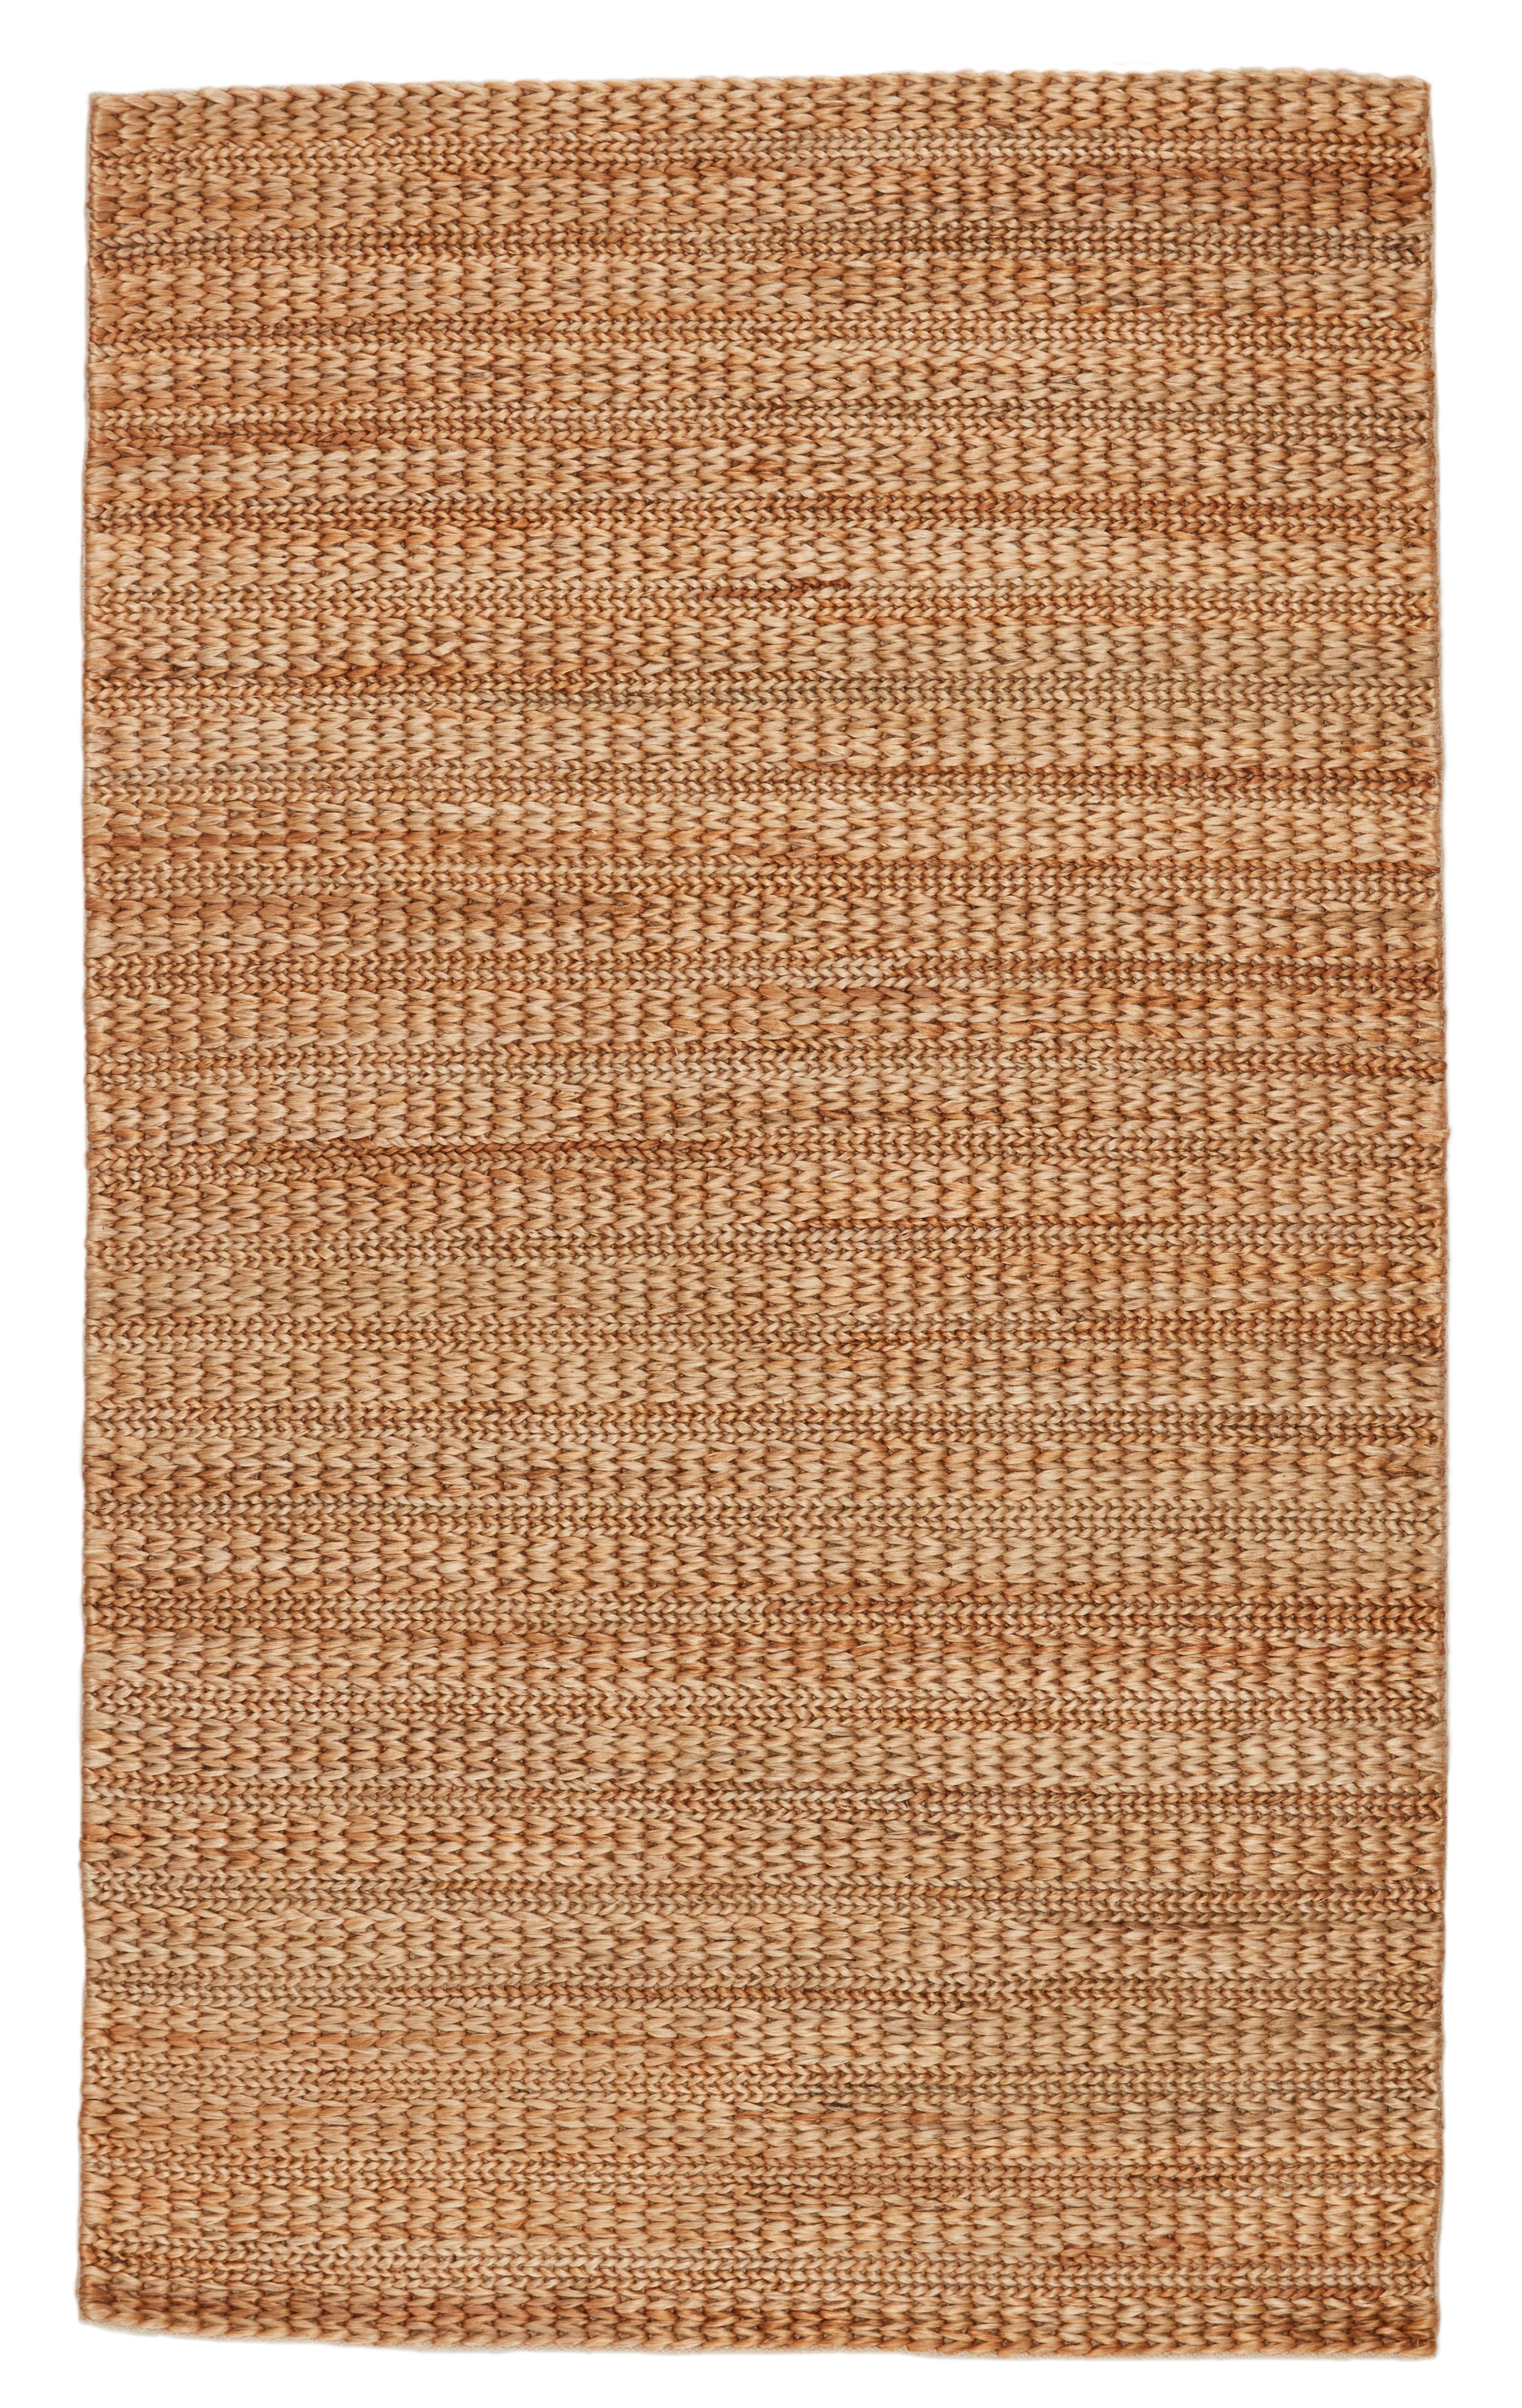 Poncy Natural Solid Tan Area Rug (9'X12') - Image 0